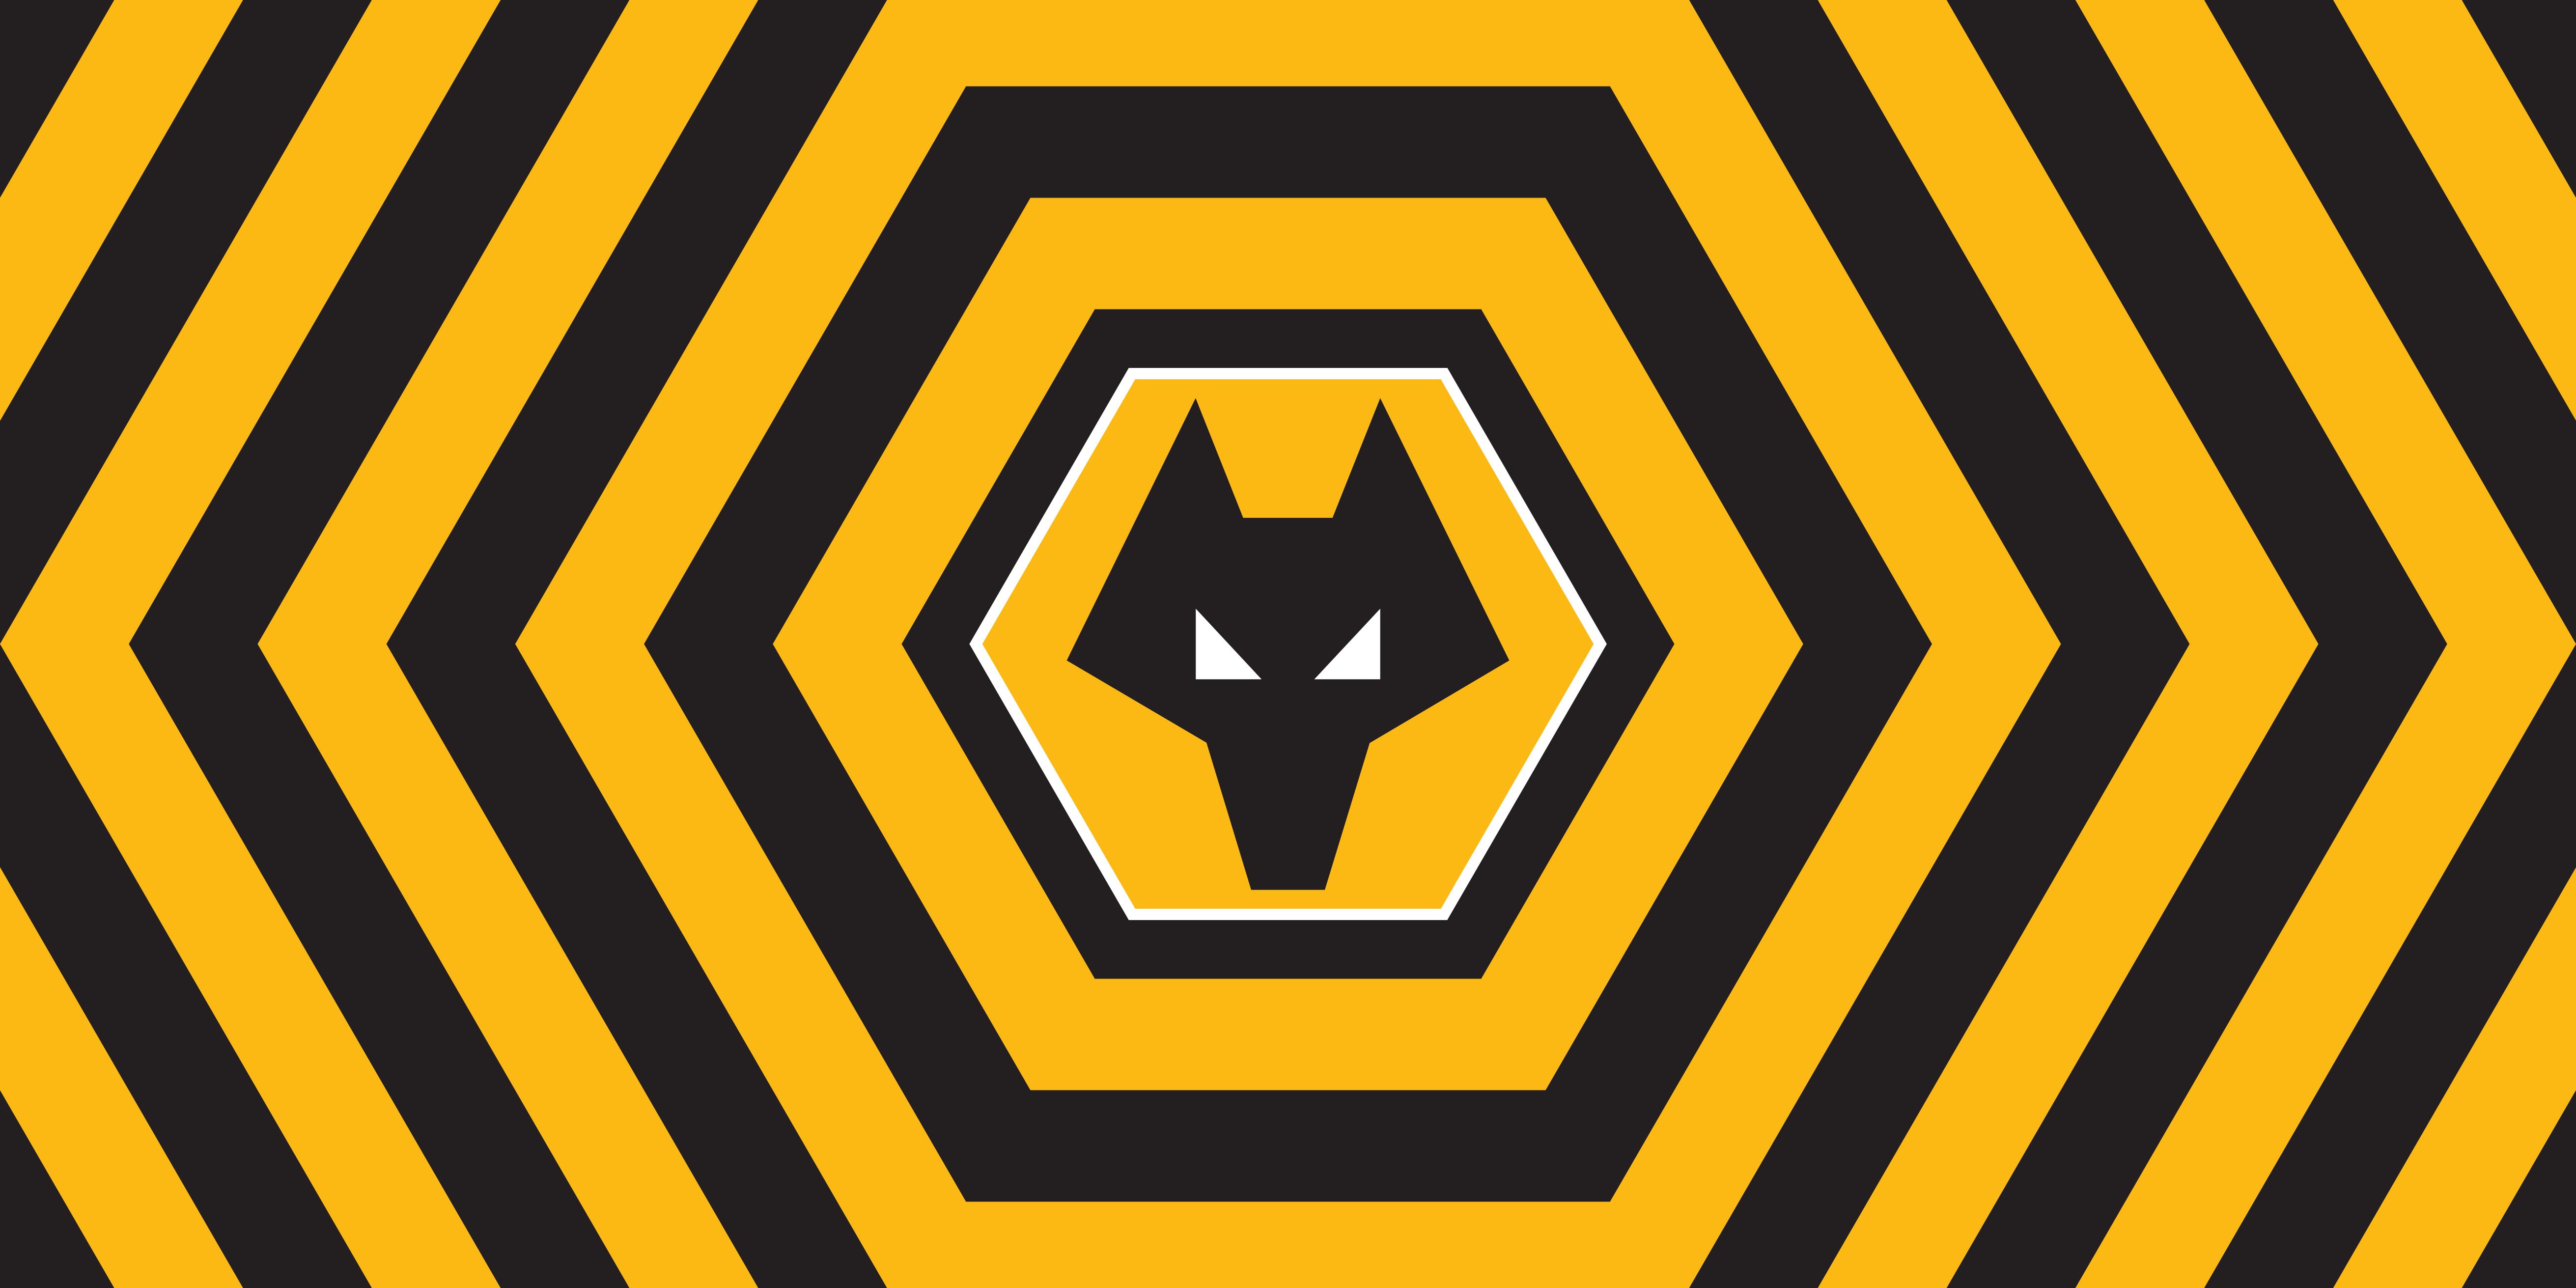 wolverhampton wanderers f c, sports, emblem, logo, soccer